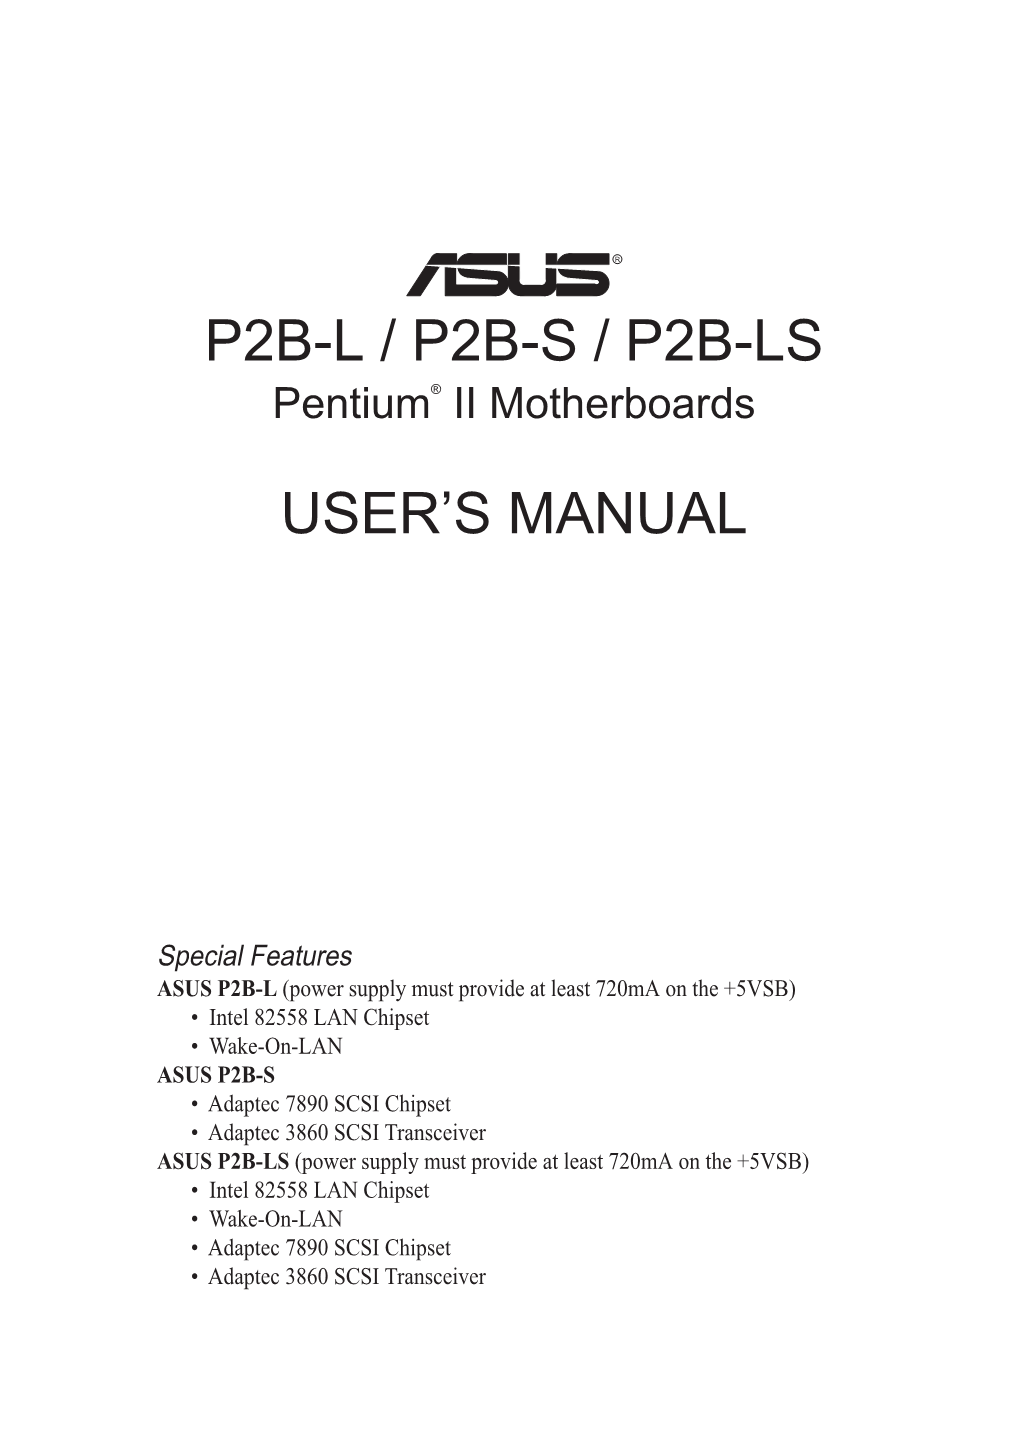 P2b-L / P2b-S / P2b-Ls User's Manual